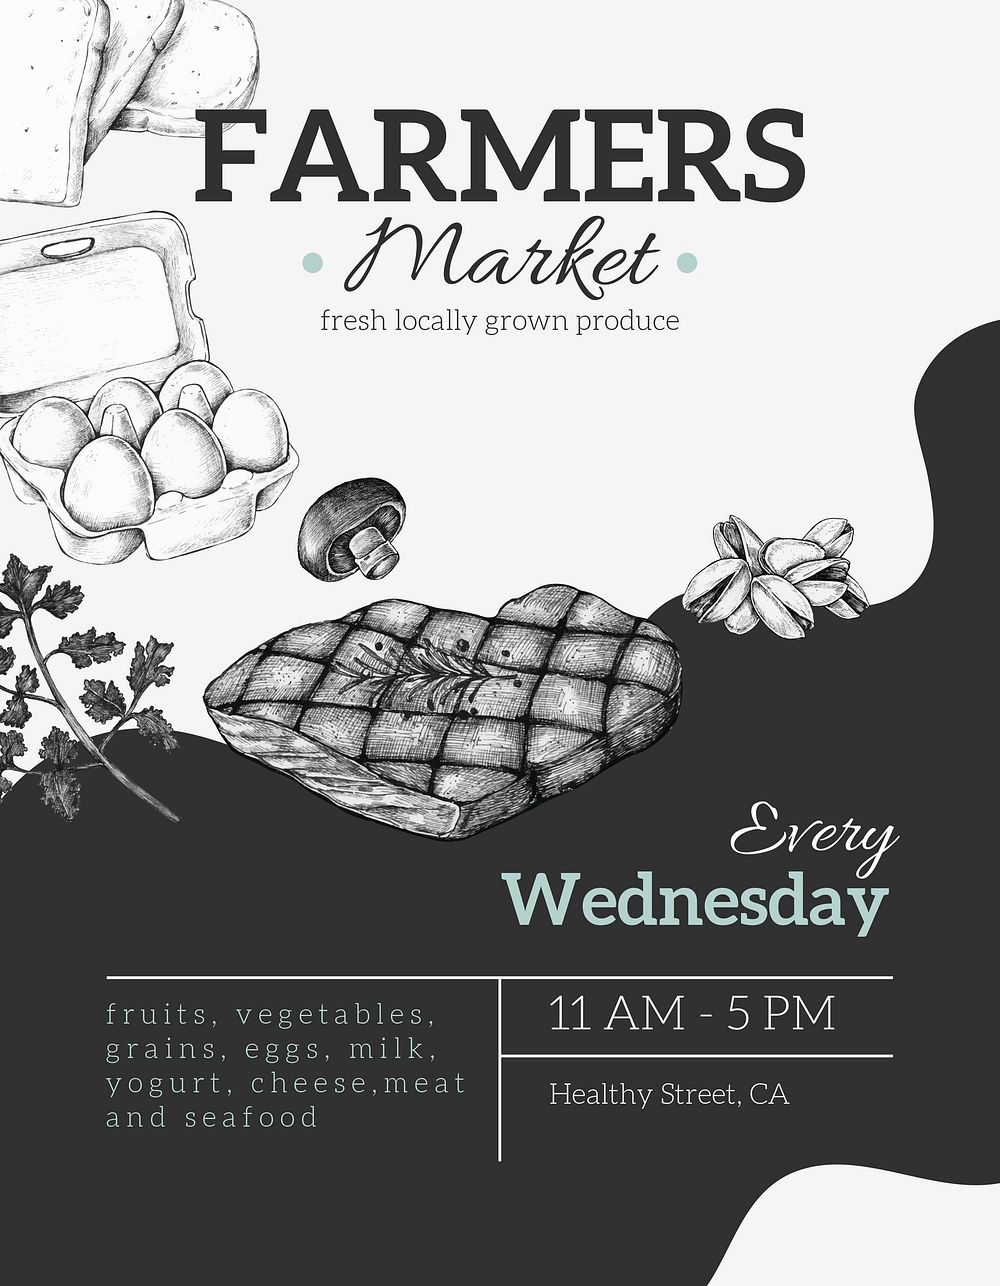 Farmers market flyer template, aesthetic editable food design psd